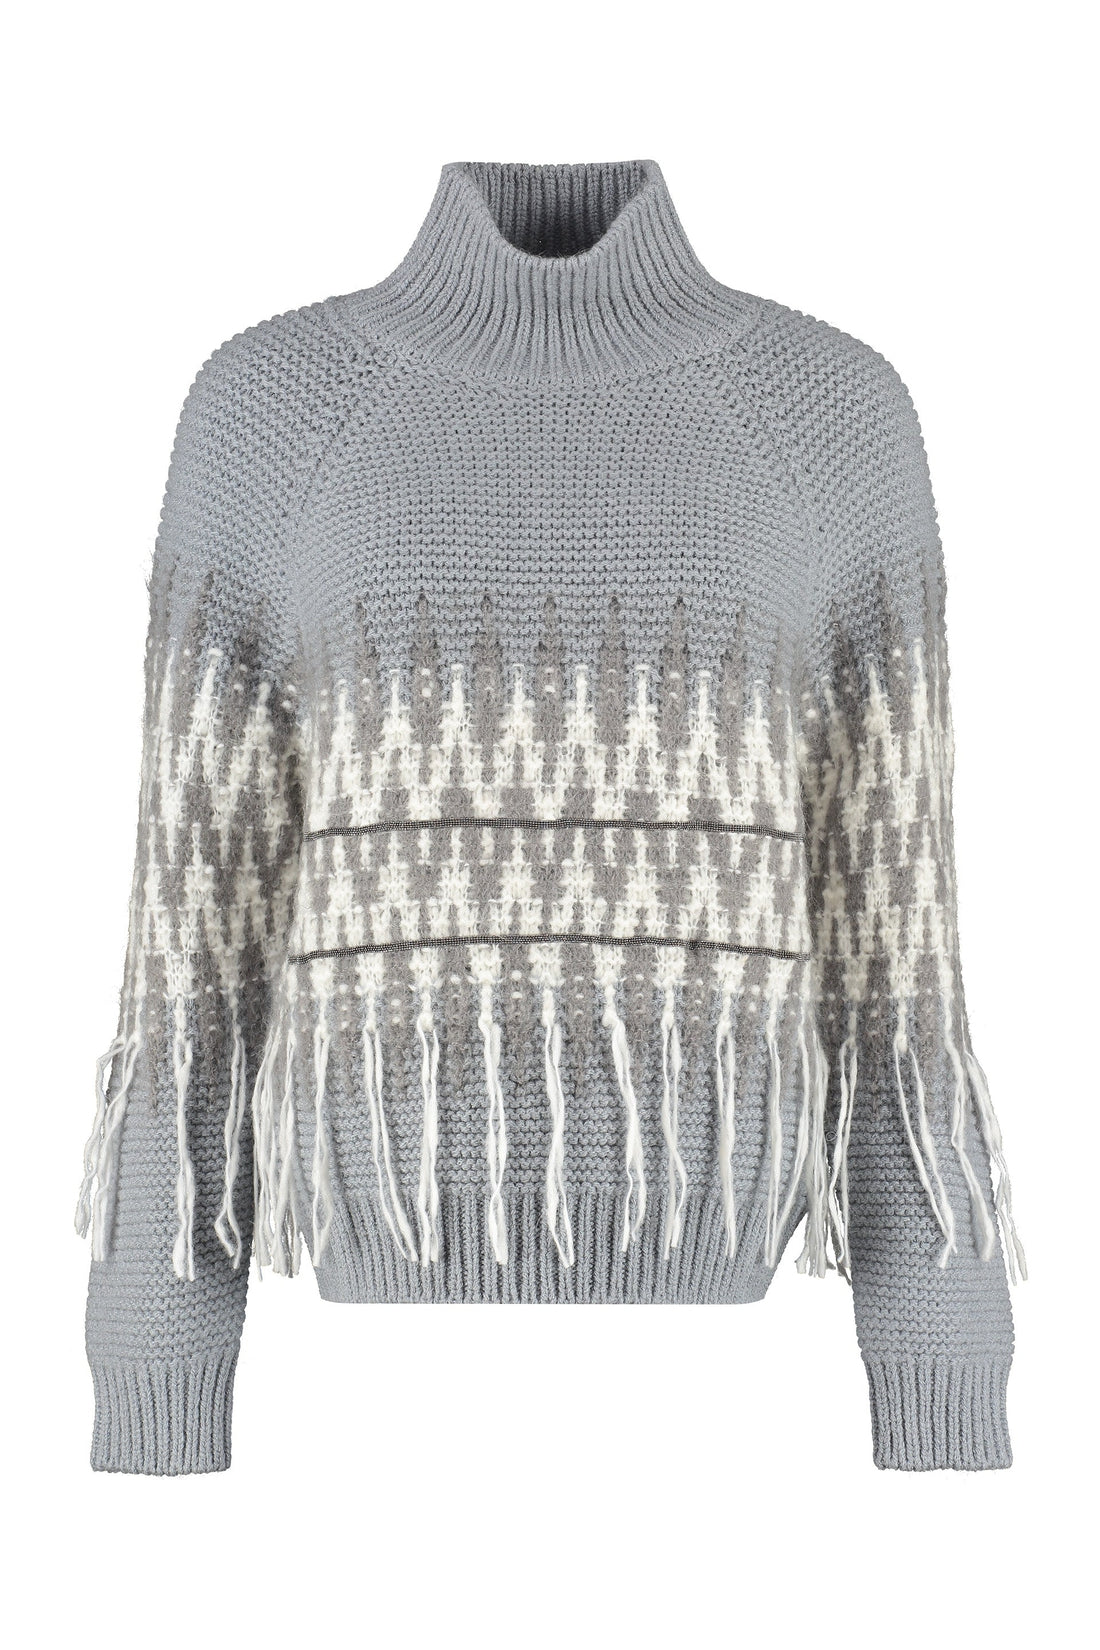 Fabiana Filippi-OUTLET-SALE-Wool blend turtleneck sweater-ARCHIVIST